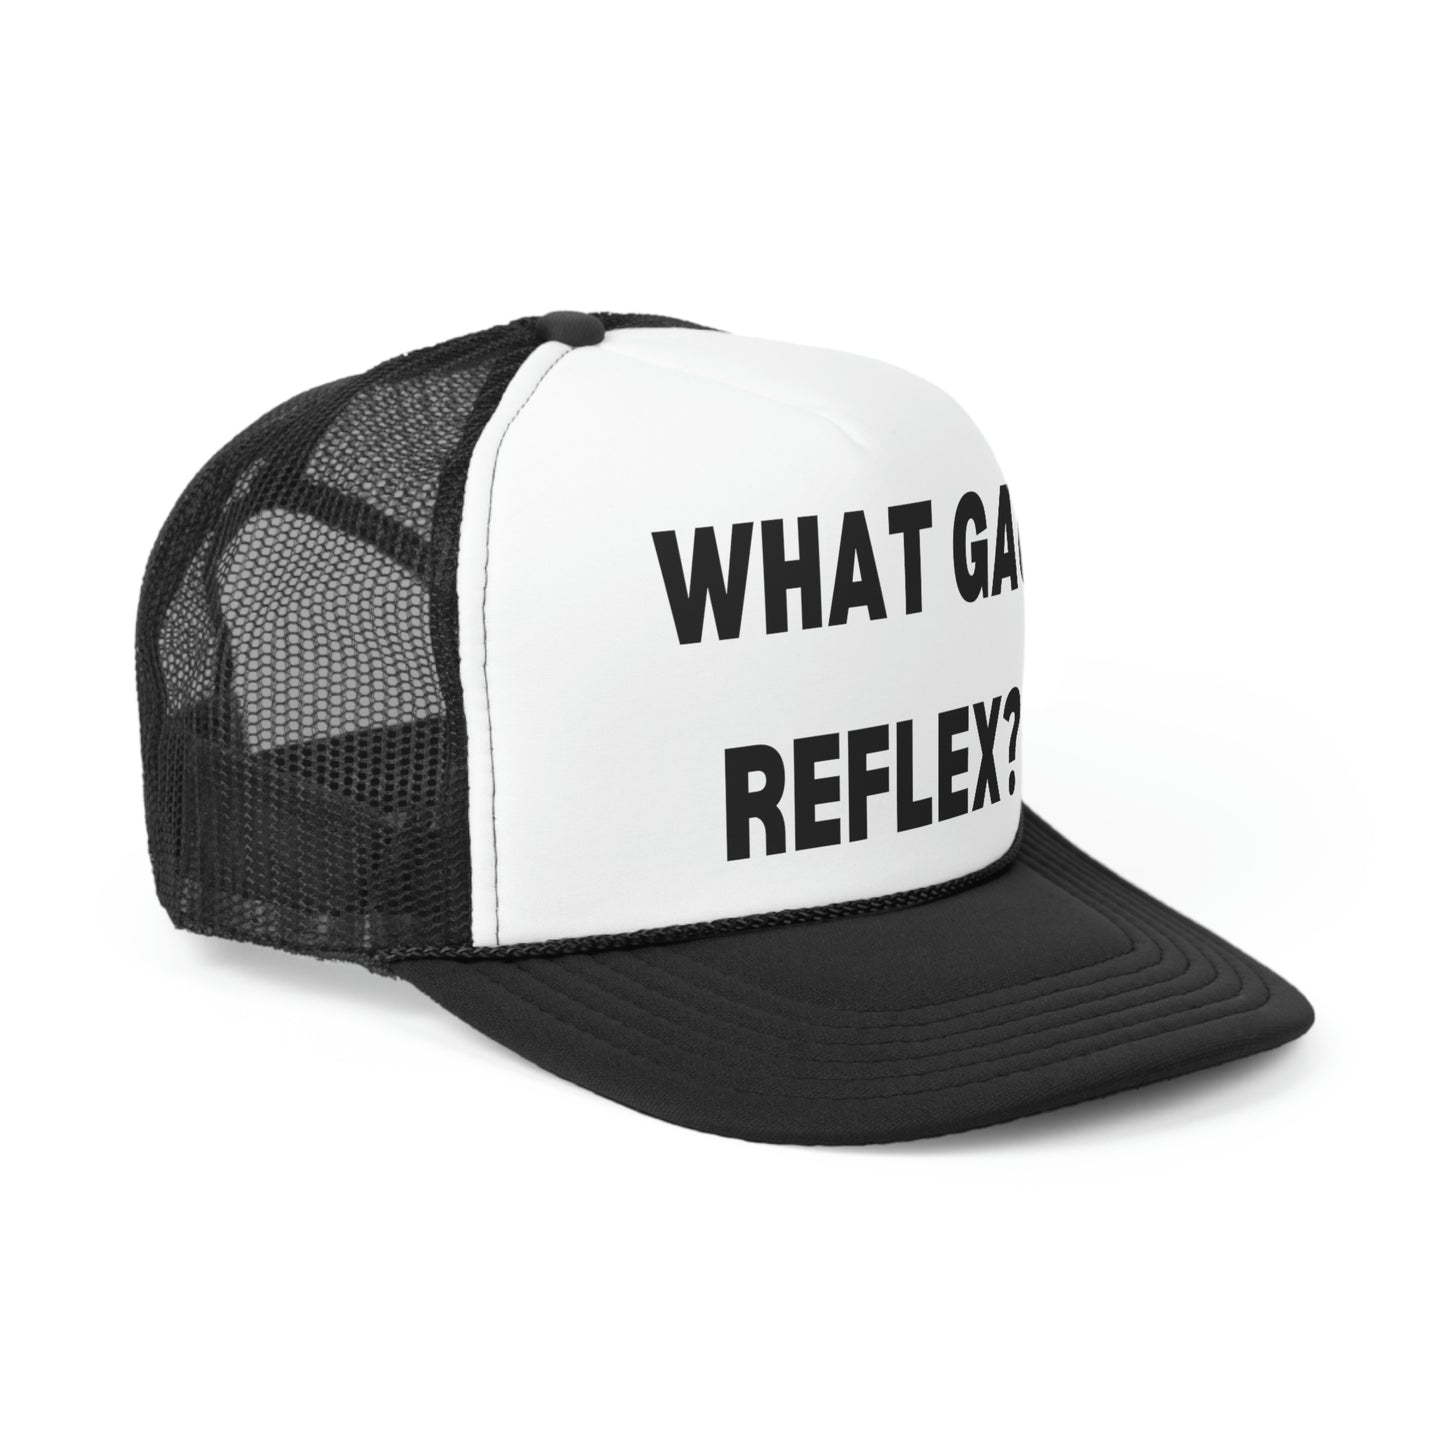 What Gag Reflex?